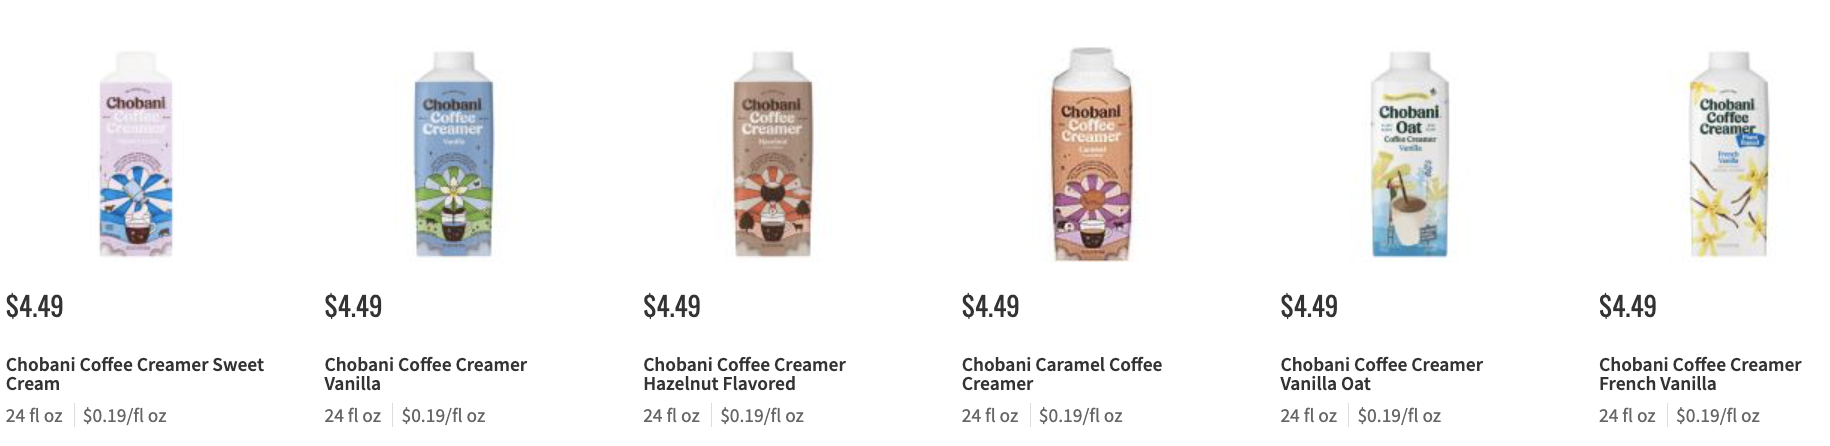 1-75-money-maker-on-chobani-coffee-creamer-at-shoprite-rebates